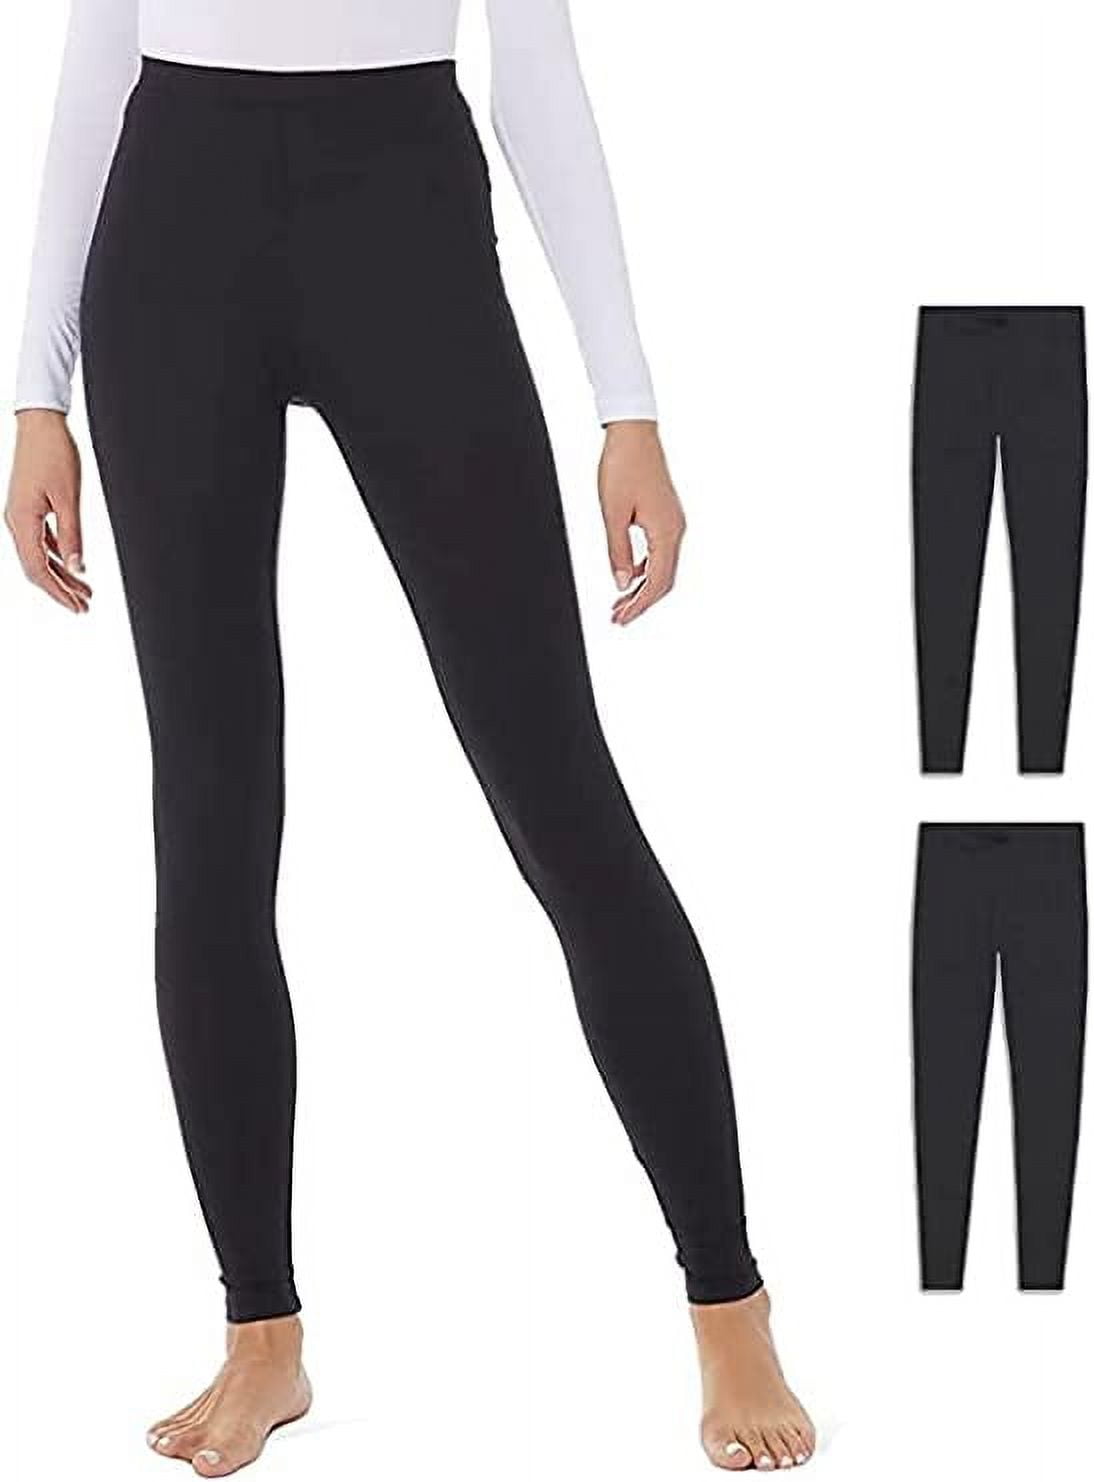 32 DEGREES Women's 2 Pack Performance Ultra Light Thermal Baselayer Legging  Pant Size , X-Large Black/Black